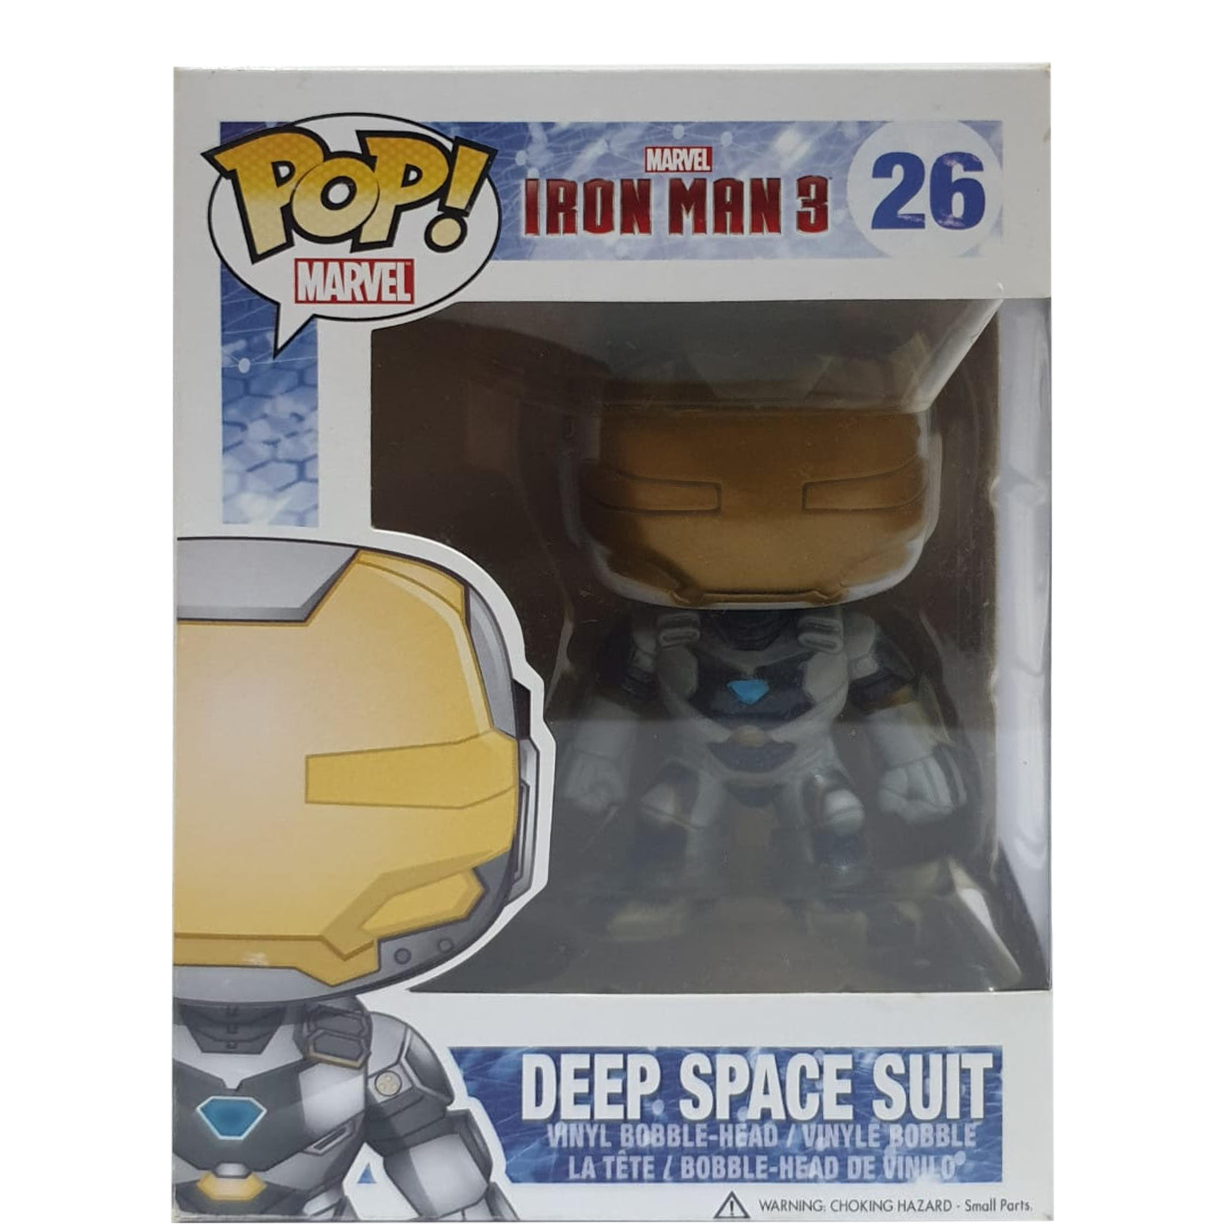 Funko Pop! Marvel Iron Man 3 Deep Space Suit Bobble-Head Figure 